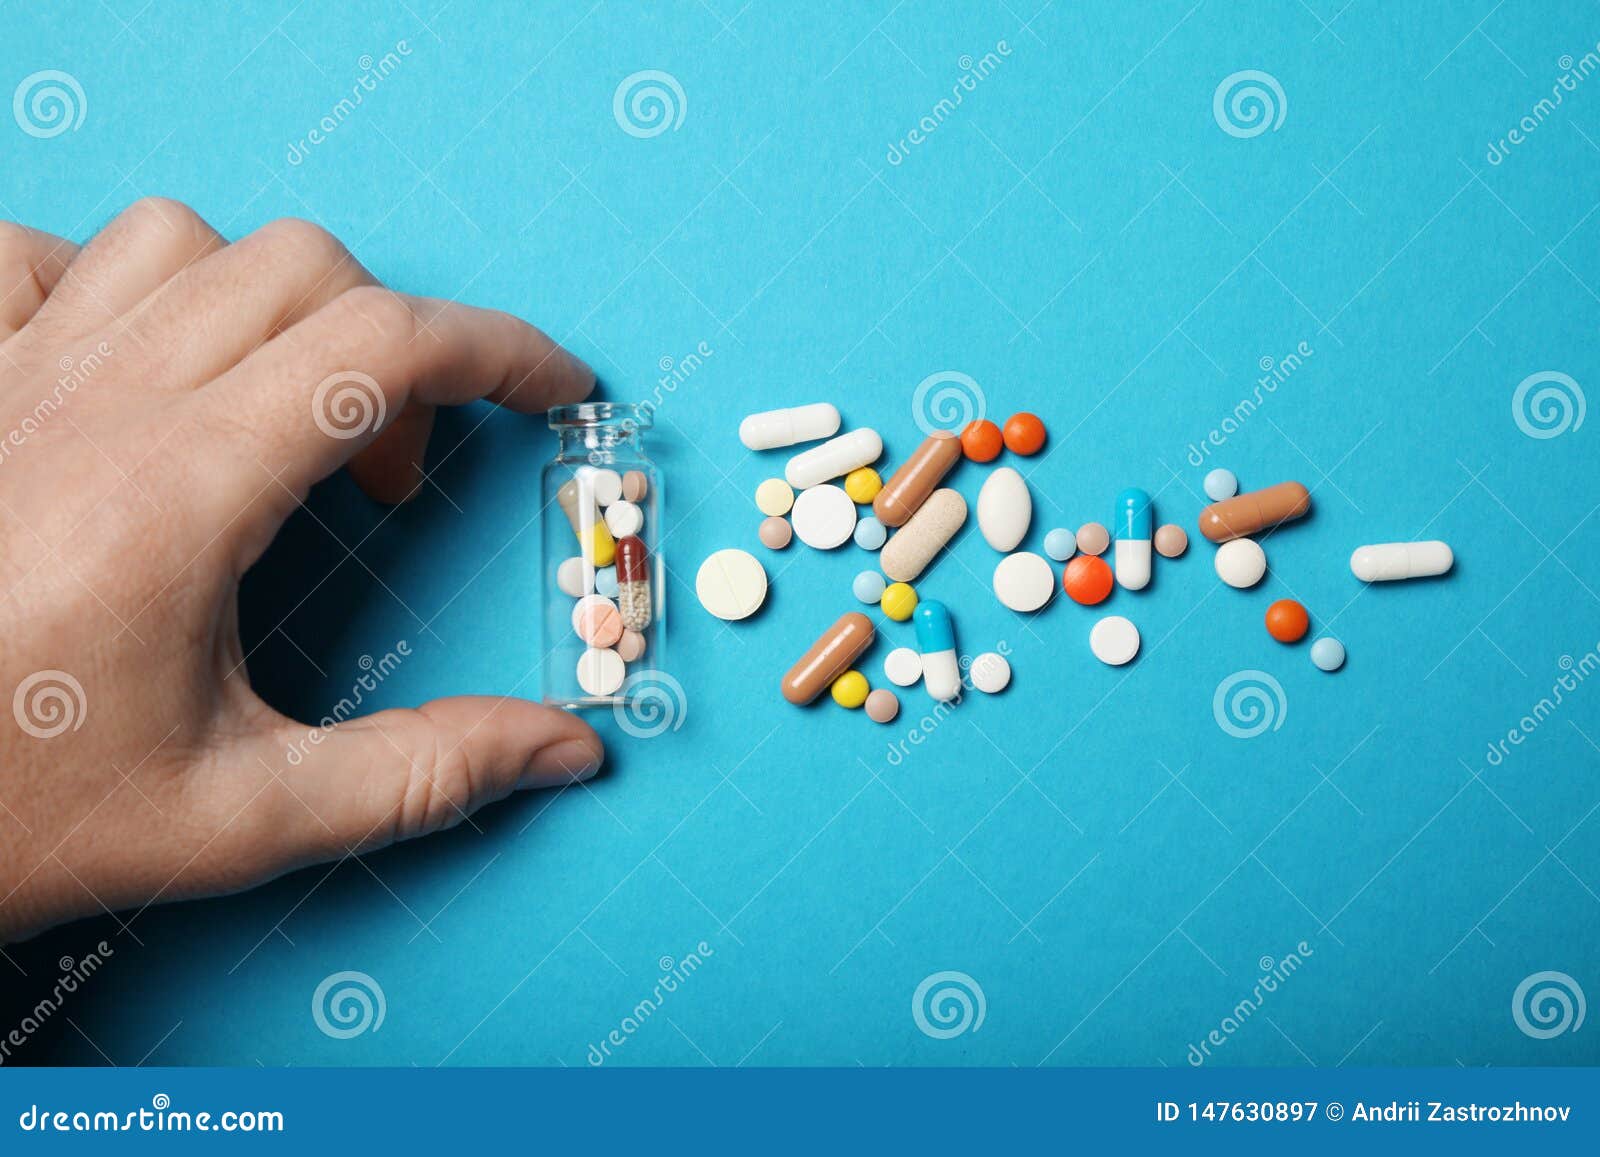 medical pharmacology addiction. antidepressant, antibiotic, antioxidant, aspirin pills